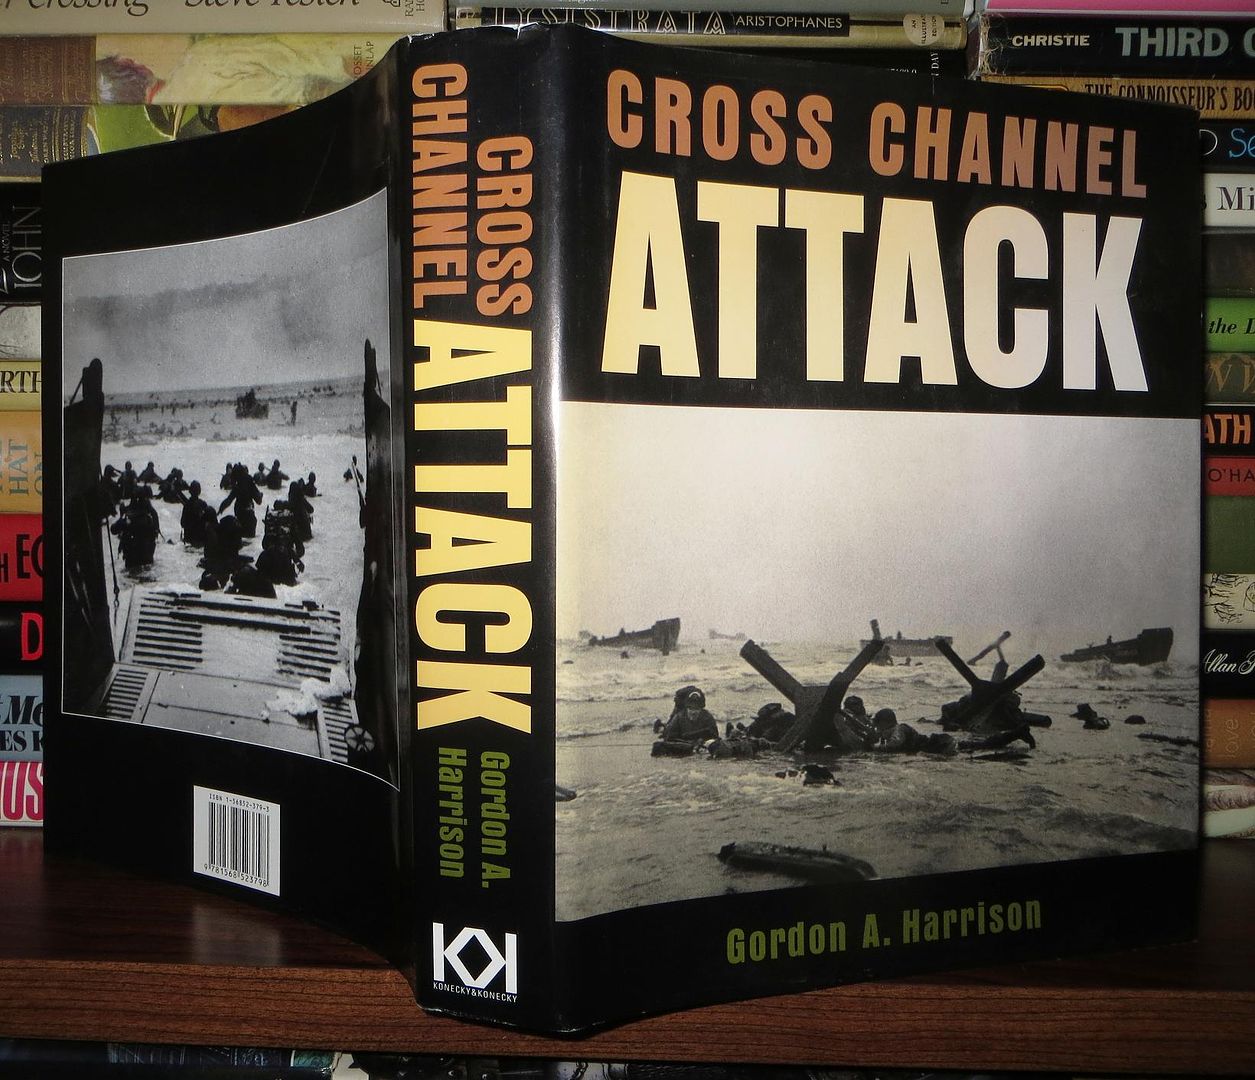 HARRISON, GORDON A. - Cross Channel Attack